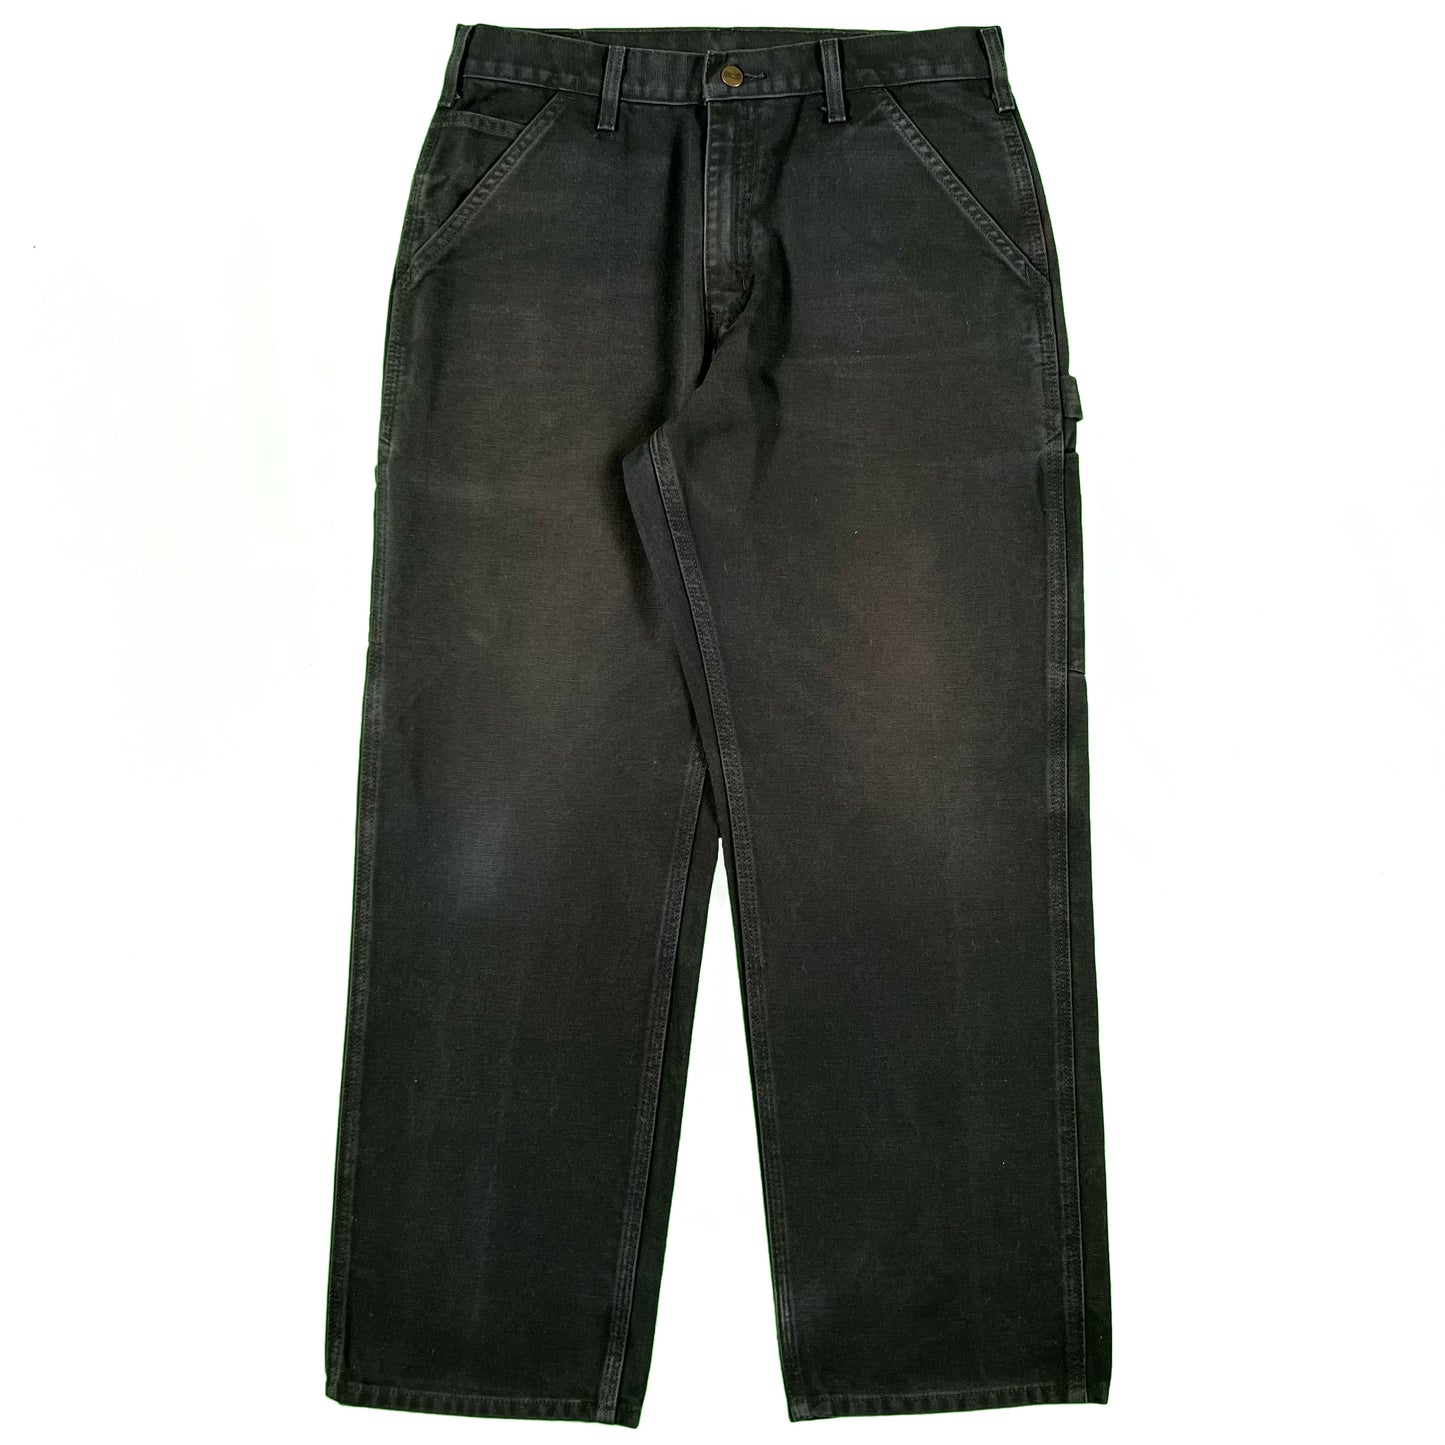 00s Carhartt Black Carpenter Pants- 31x29